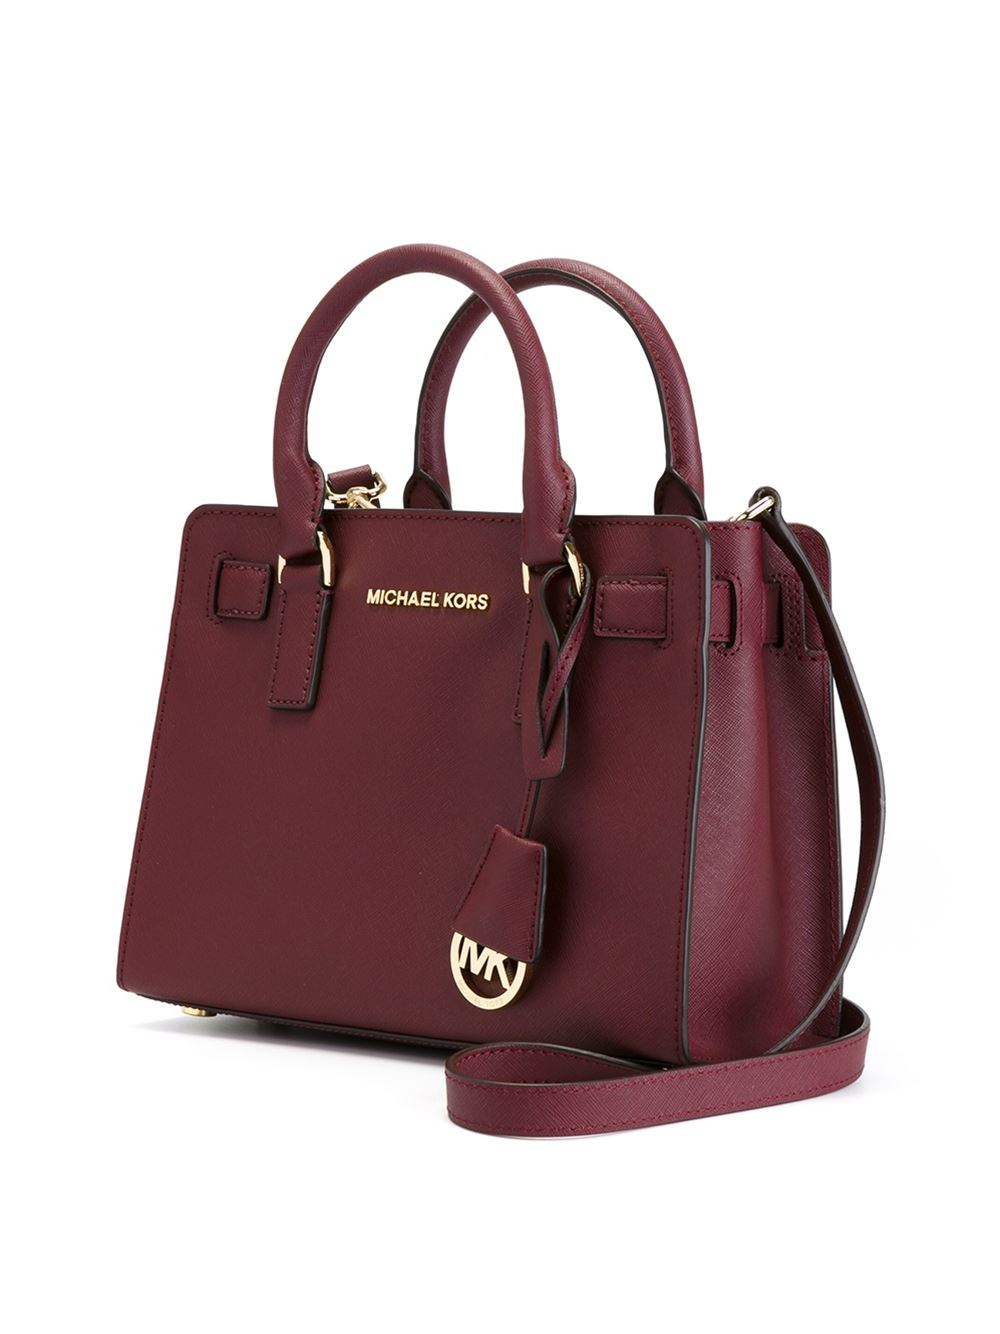 michael kors burgundy handbag